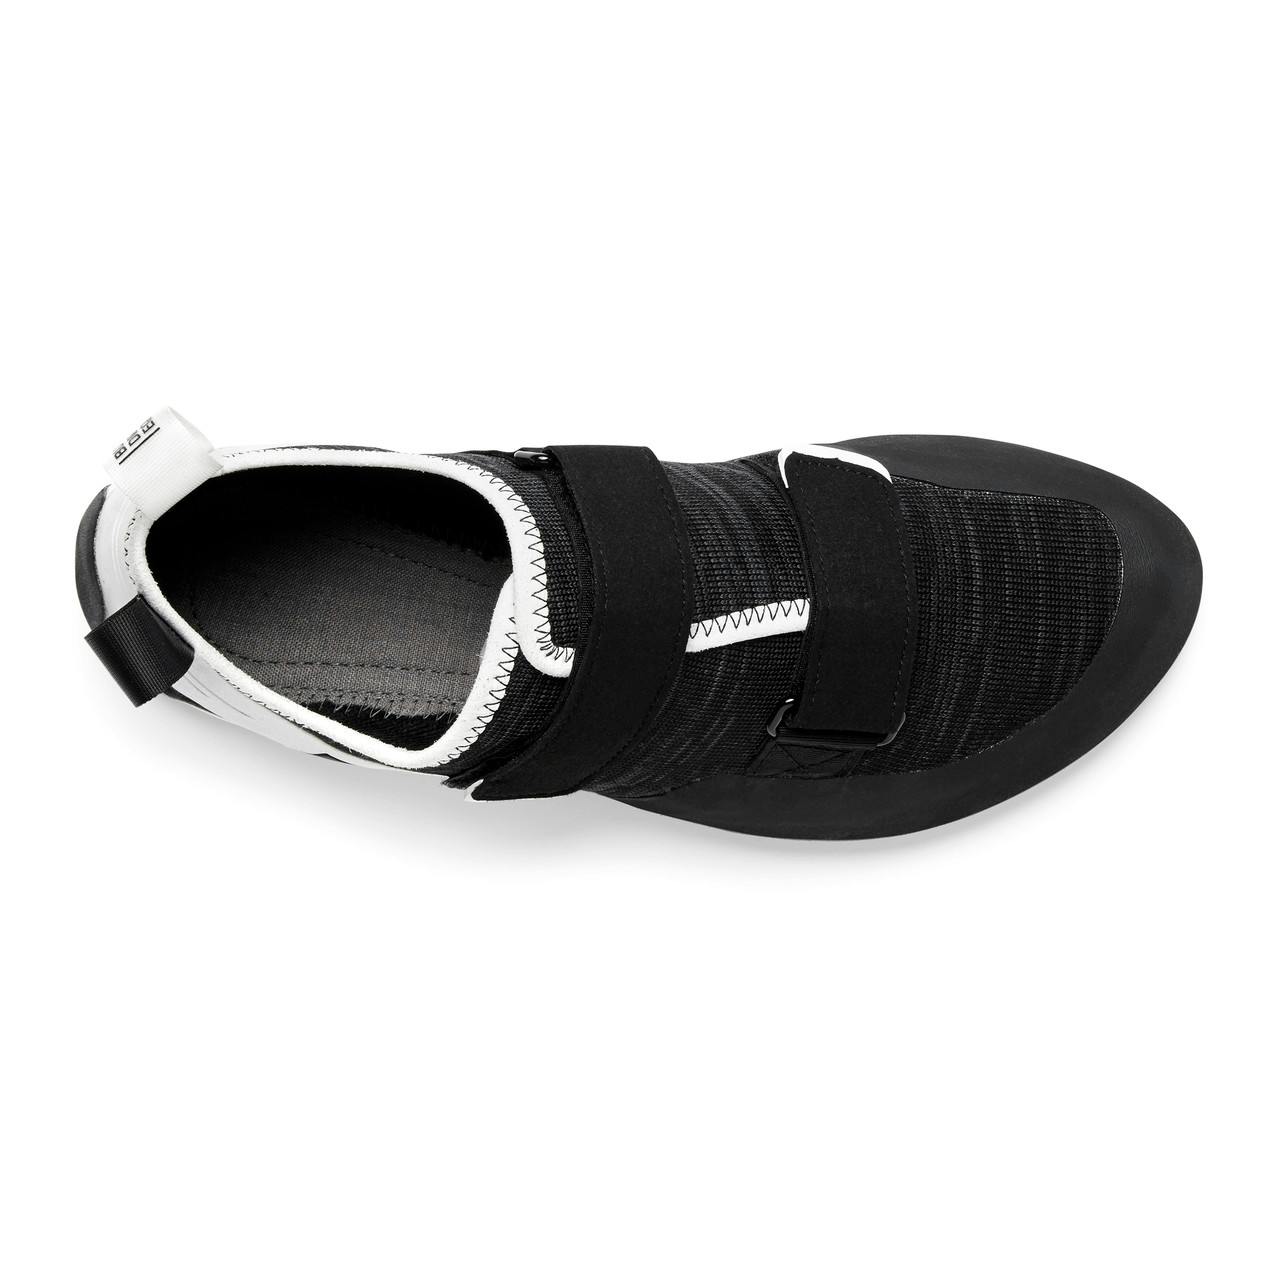 Momentum Rock Shoes White/Black